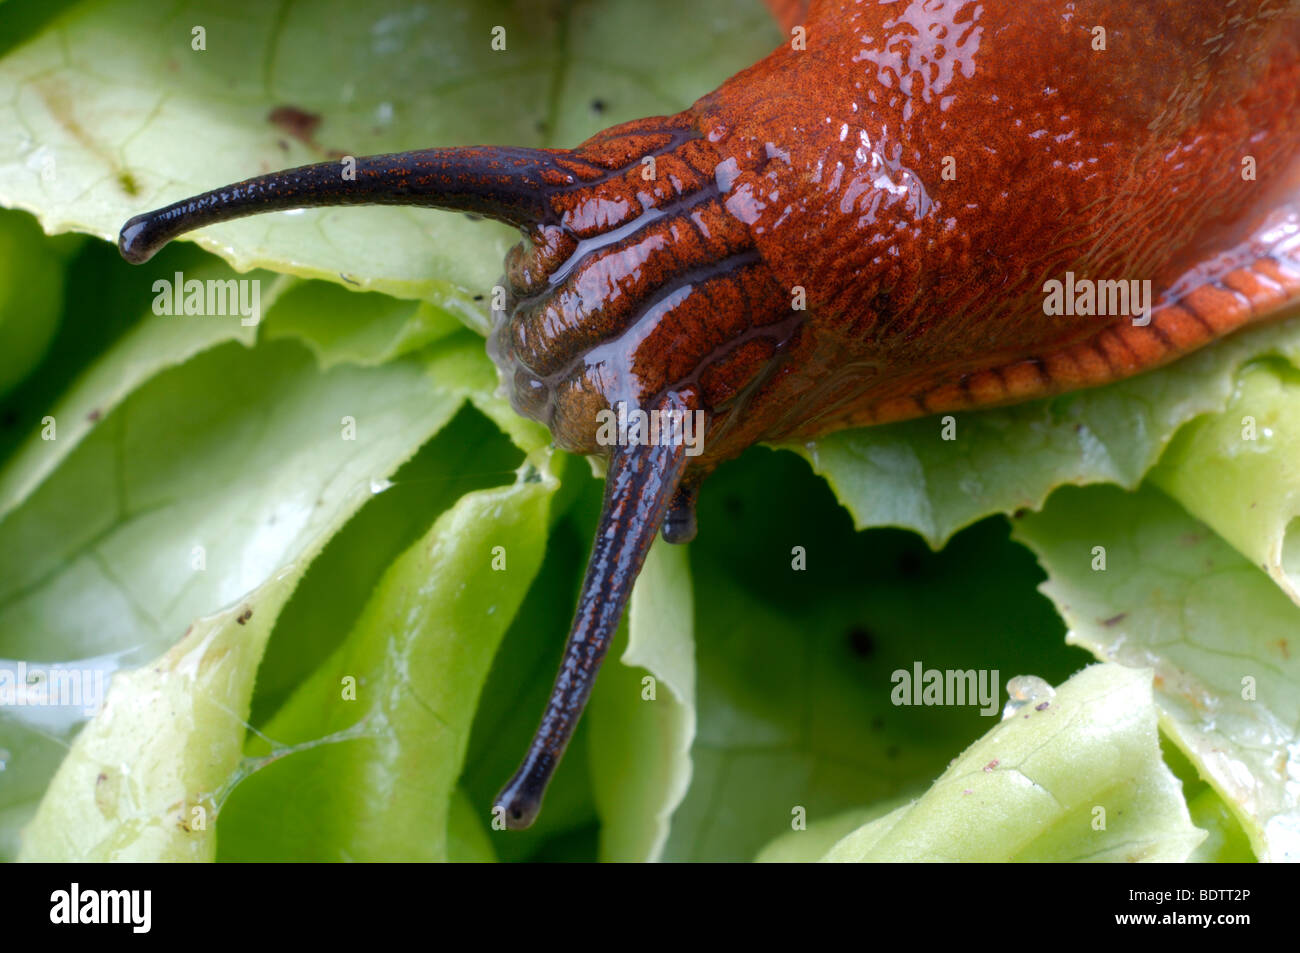 Spanish Slug, Lusitanian Slug eat salad, Arion lusitanicus, Spanische Wegschnecke frisst Salat, Arion lusitanicus Stock Photo